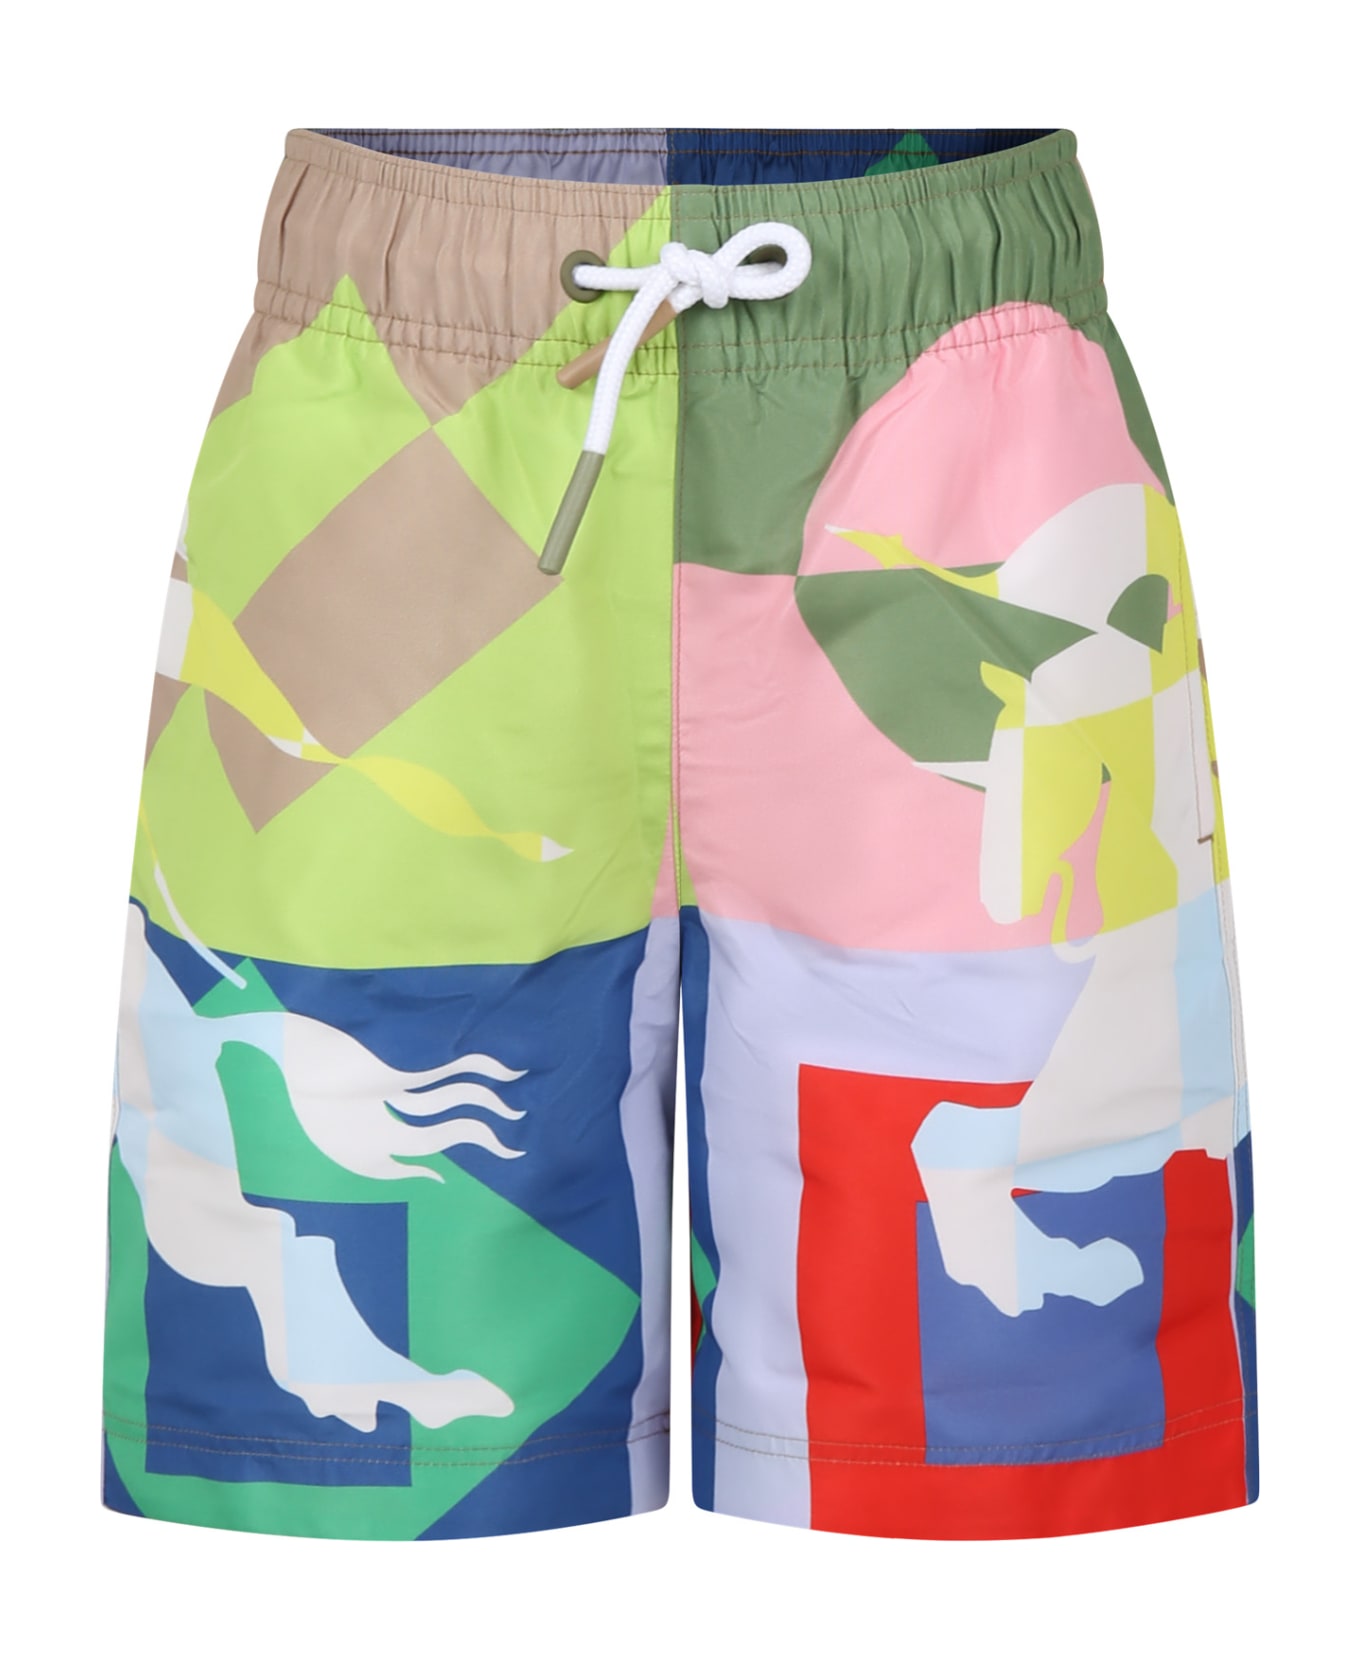 Burberry Multicolor Swim Shorts For Boy With Equestrian Knight - Multicolor 水着